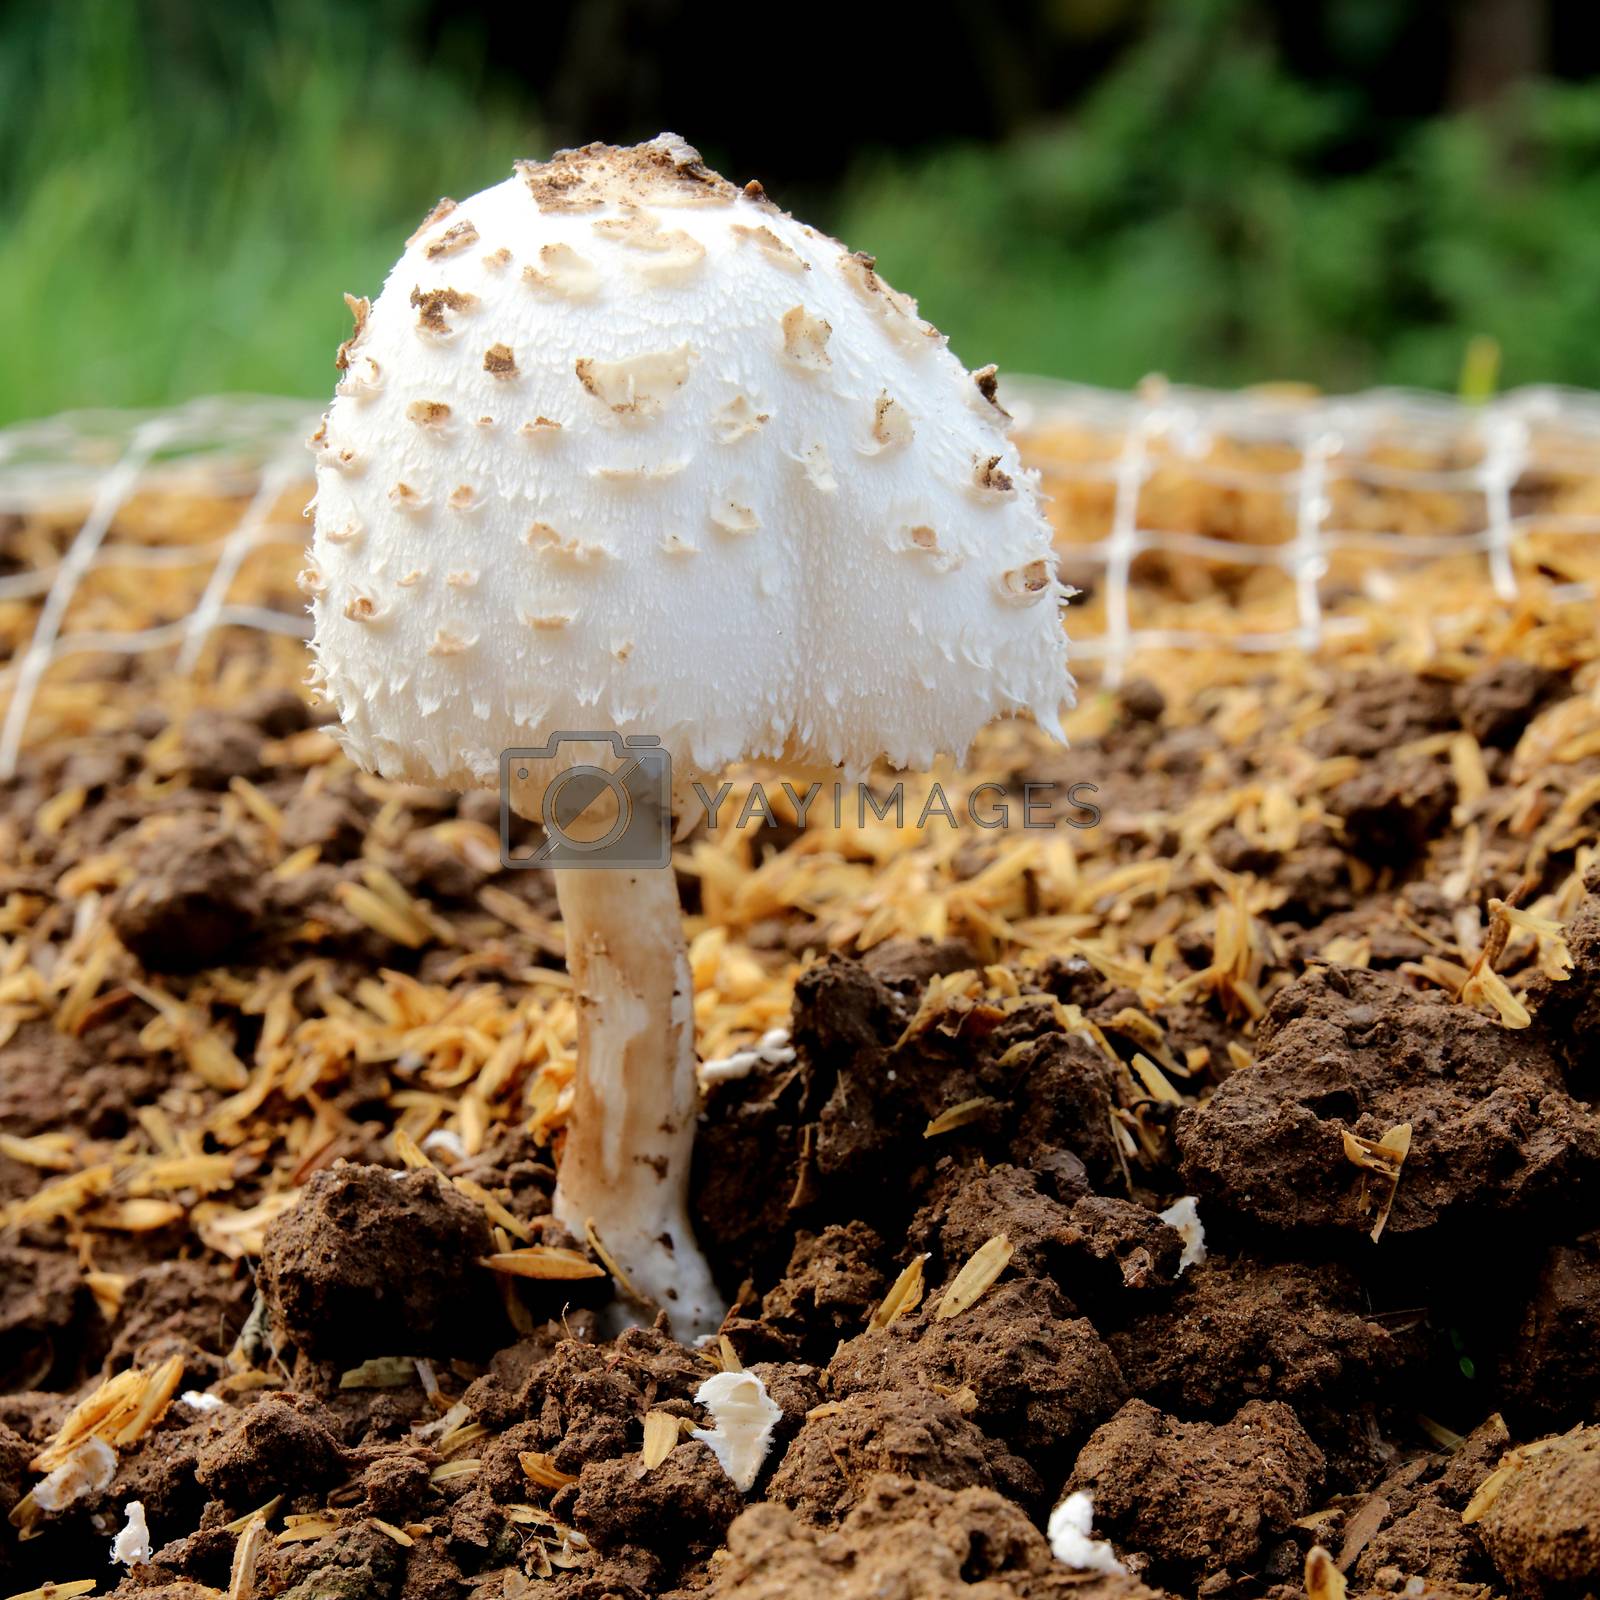 Royalty free image of White mushroom by kaidevil